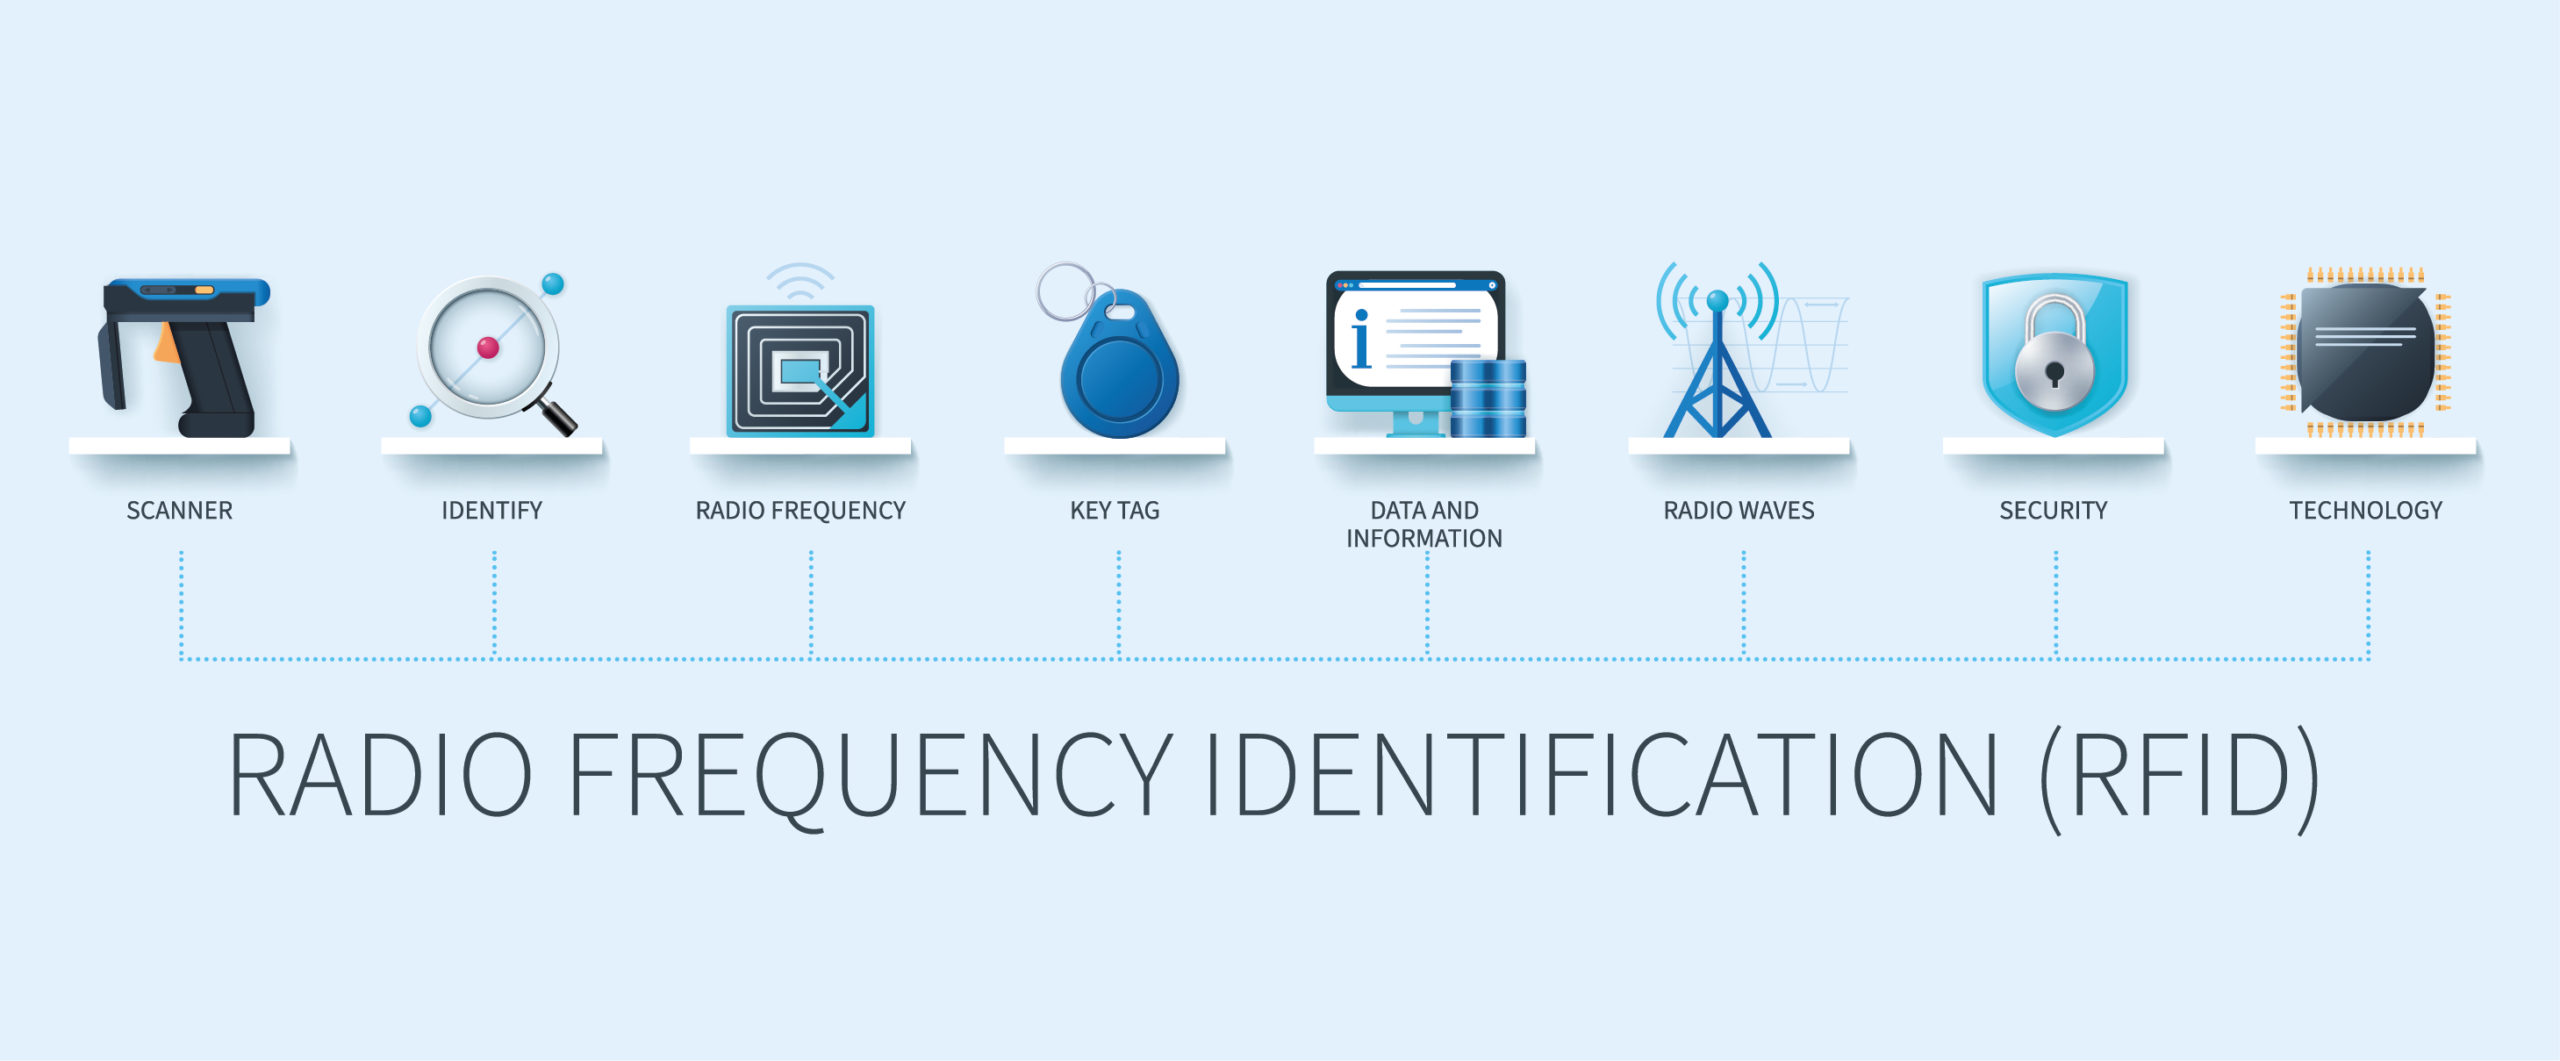 Radio Frequency Identification (Rfid)